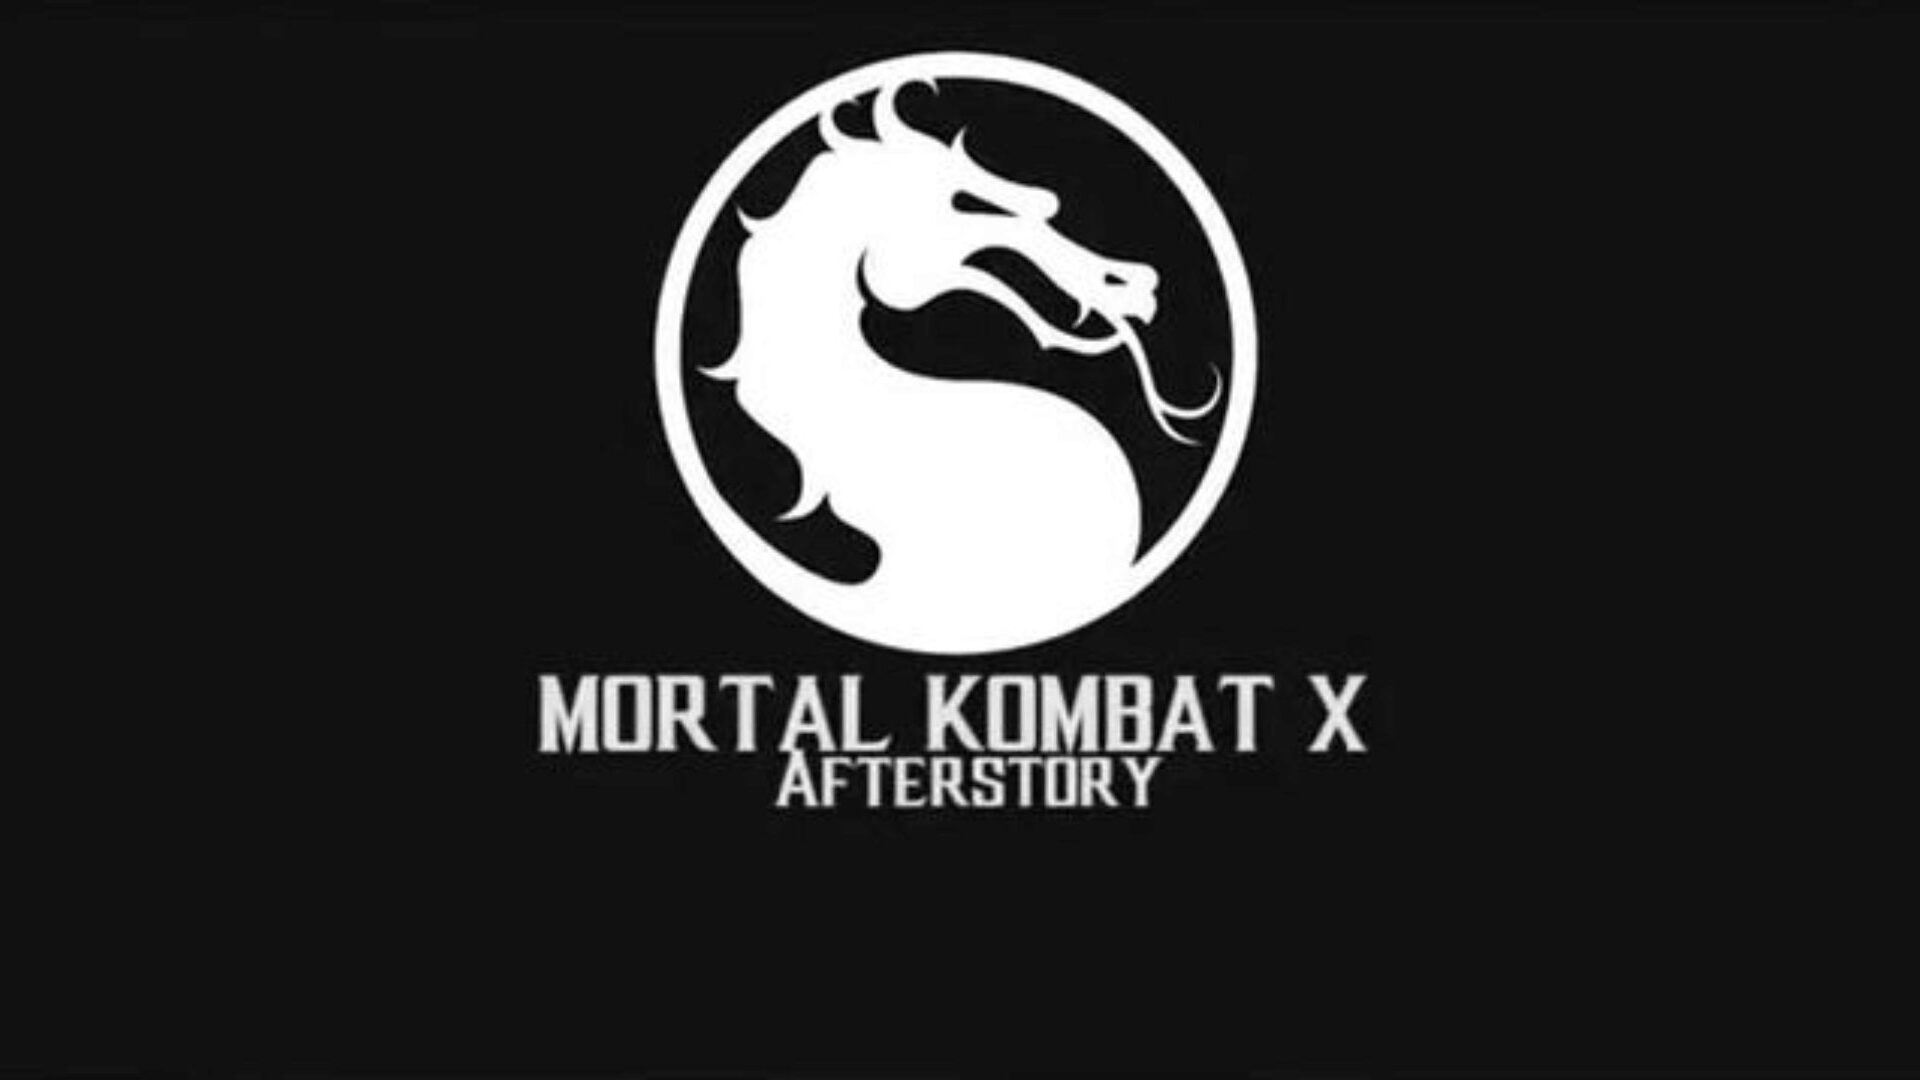 CG MORTAL KOMBAT Afterstory